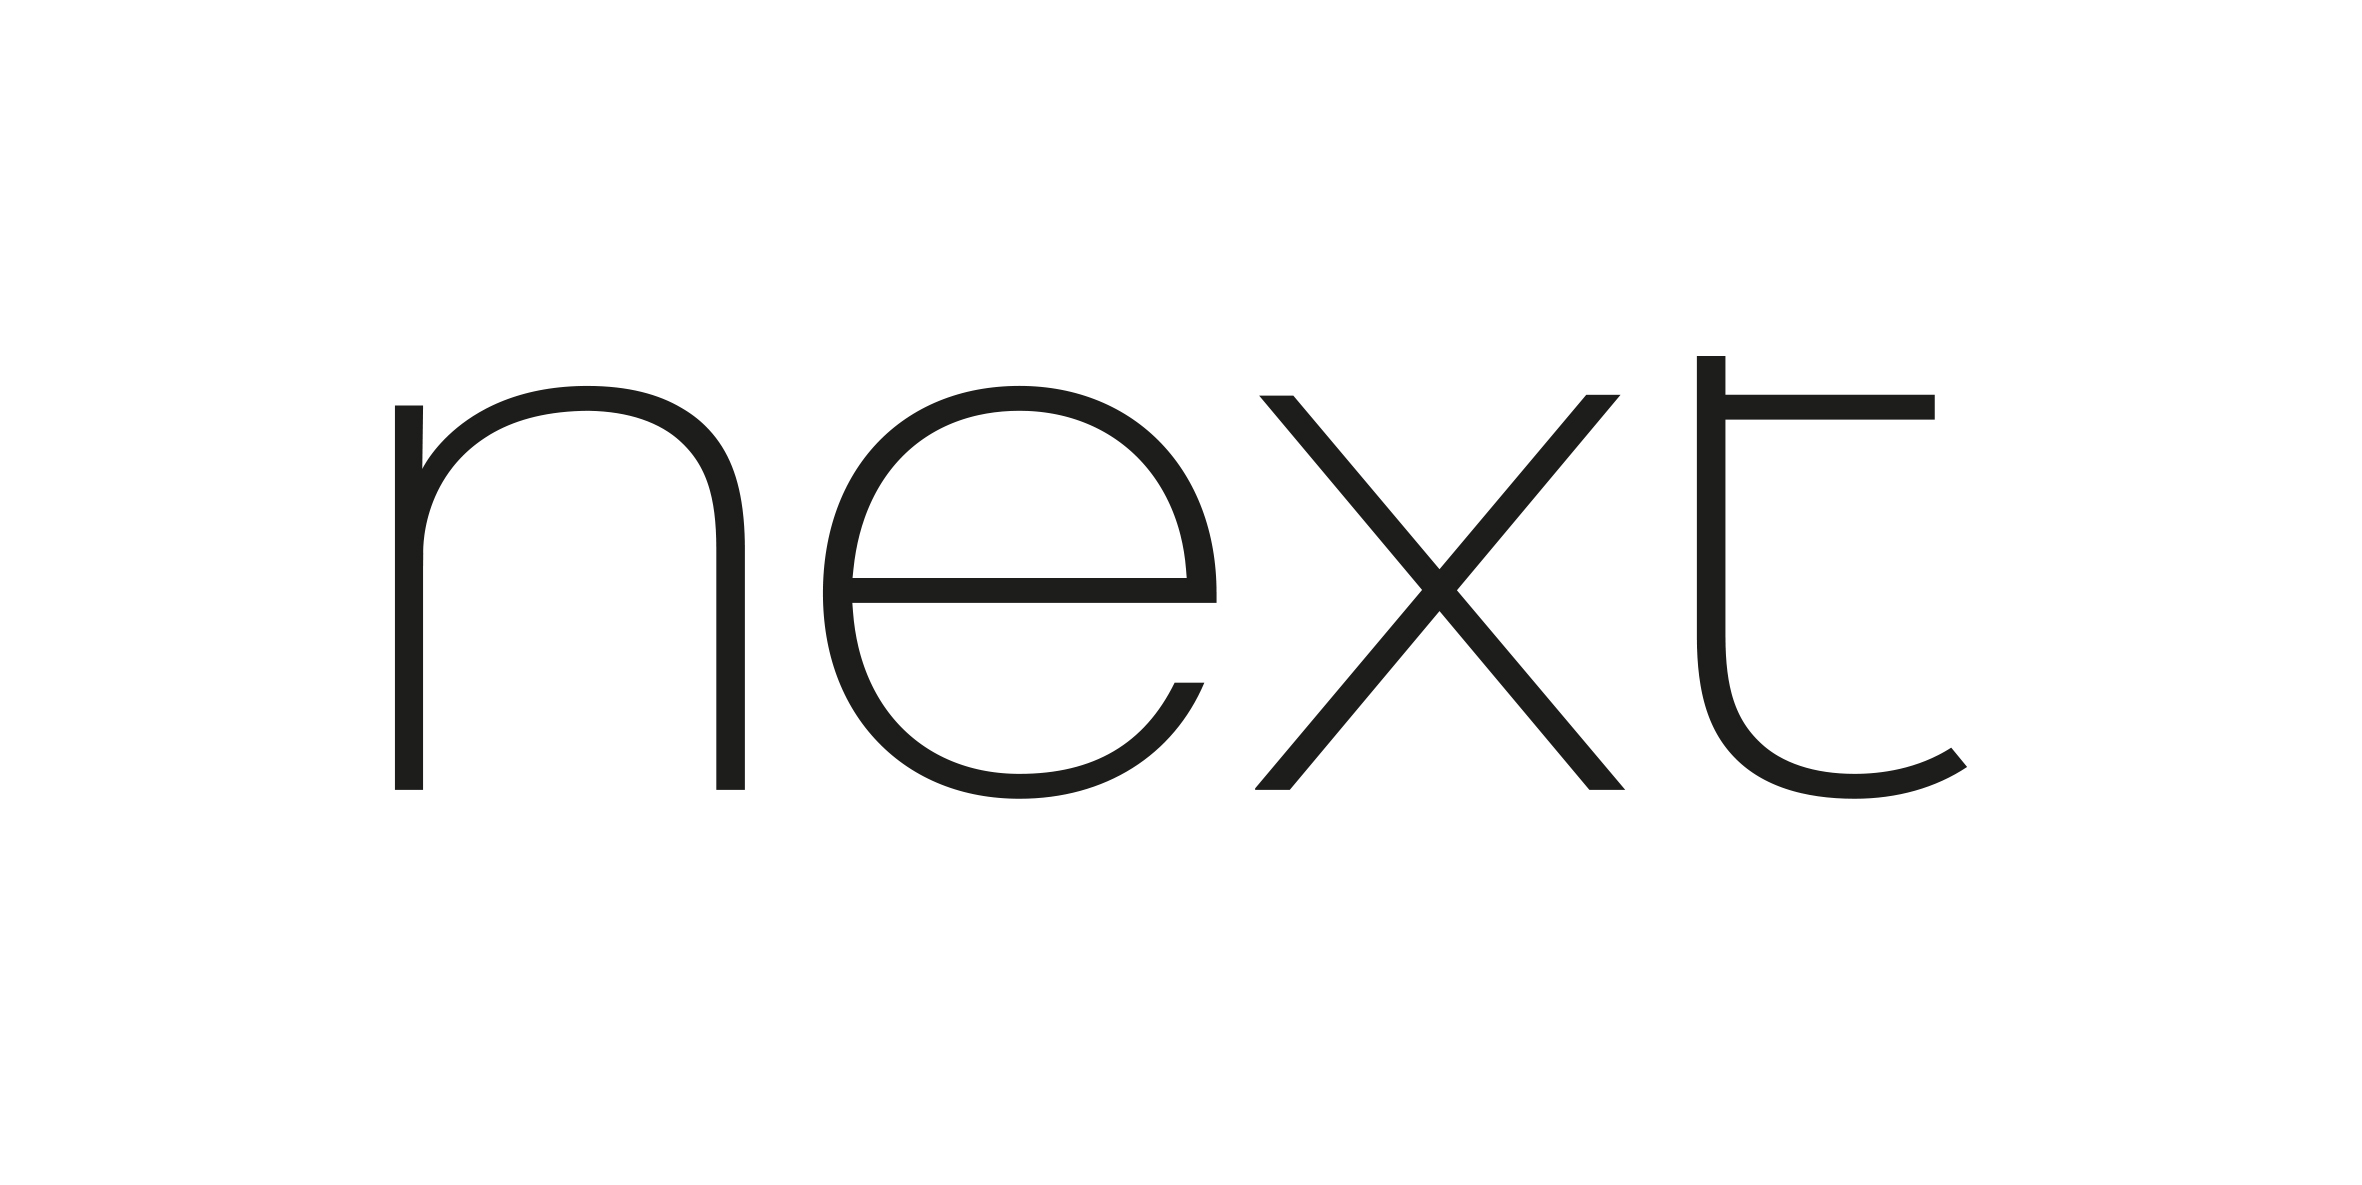 Logos – Next Plc